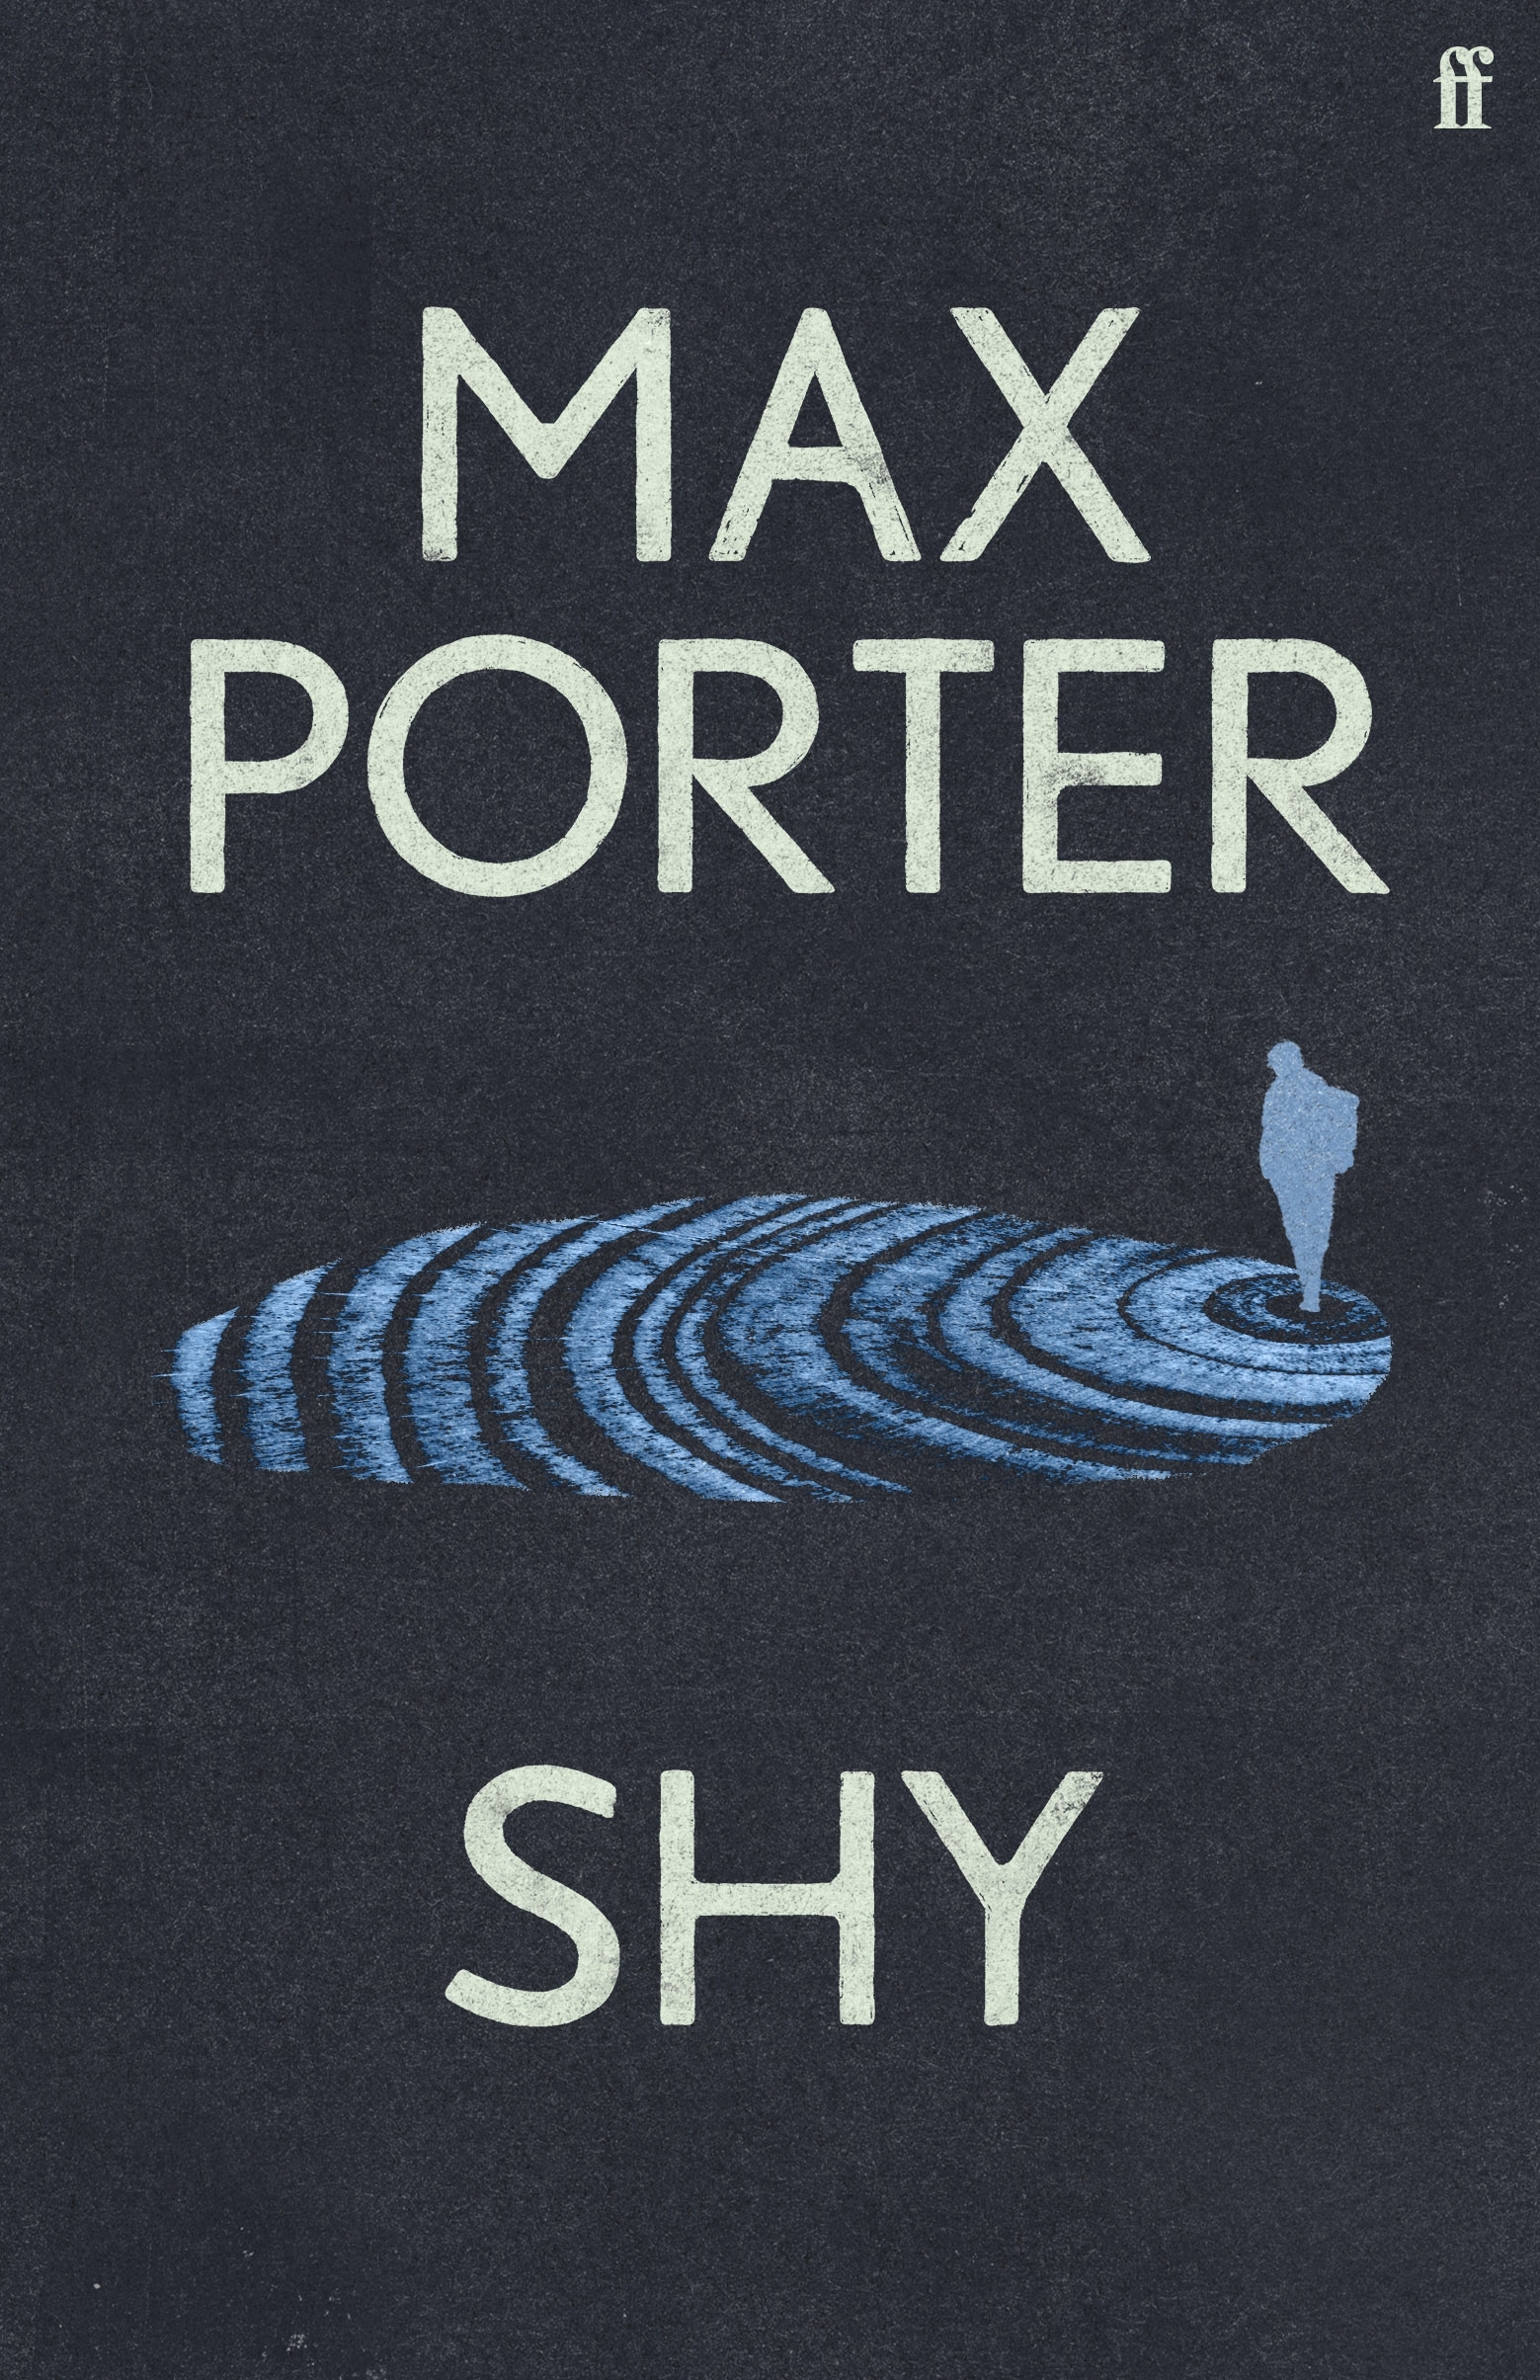 Shy | Max Porter | Charlie Byrne's